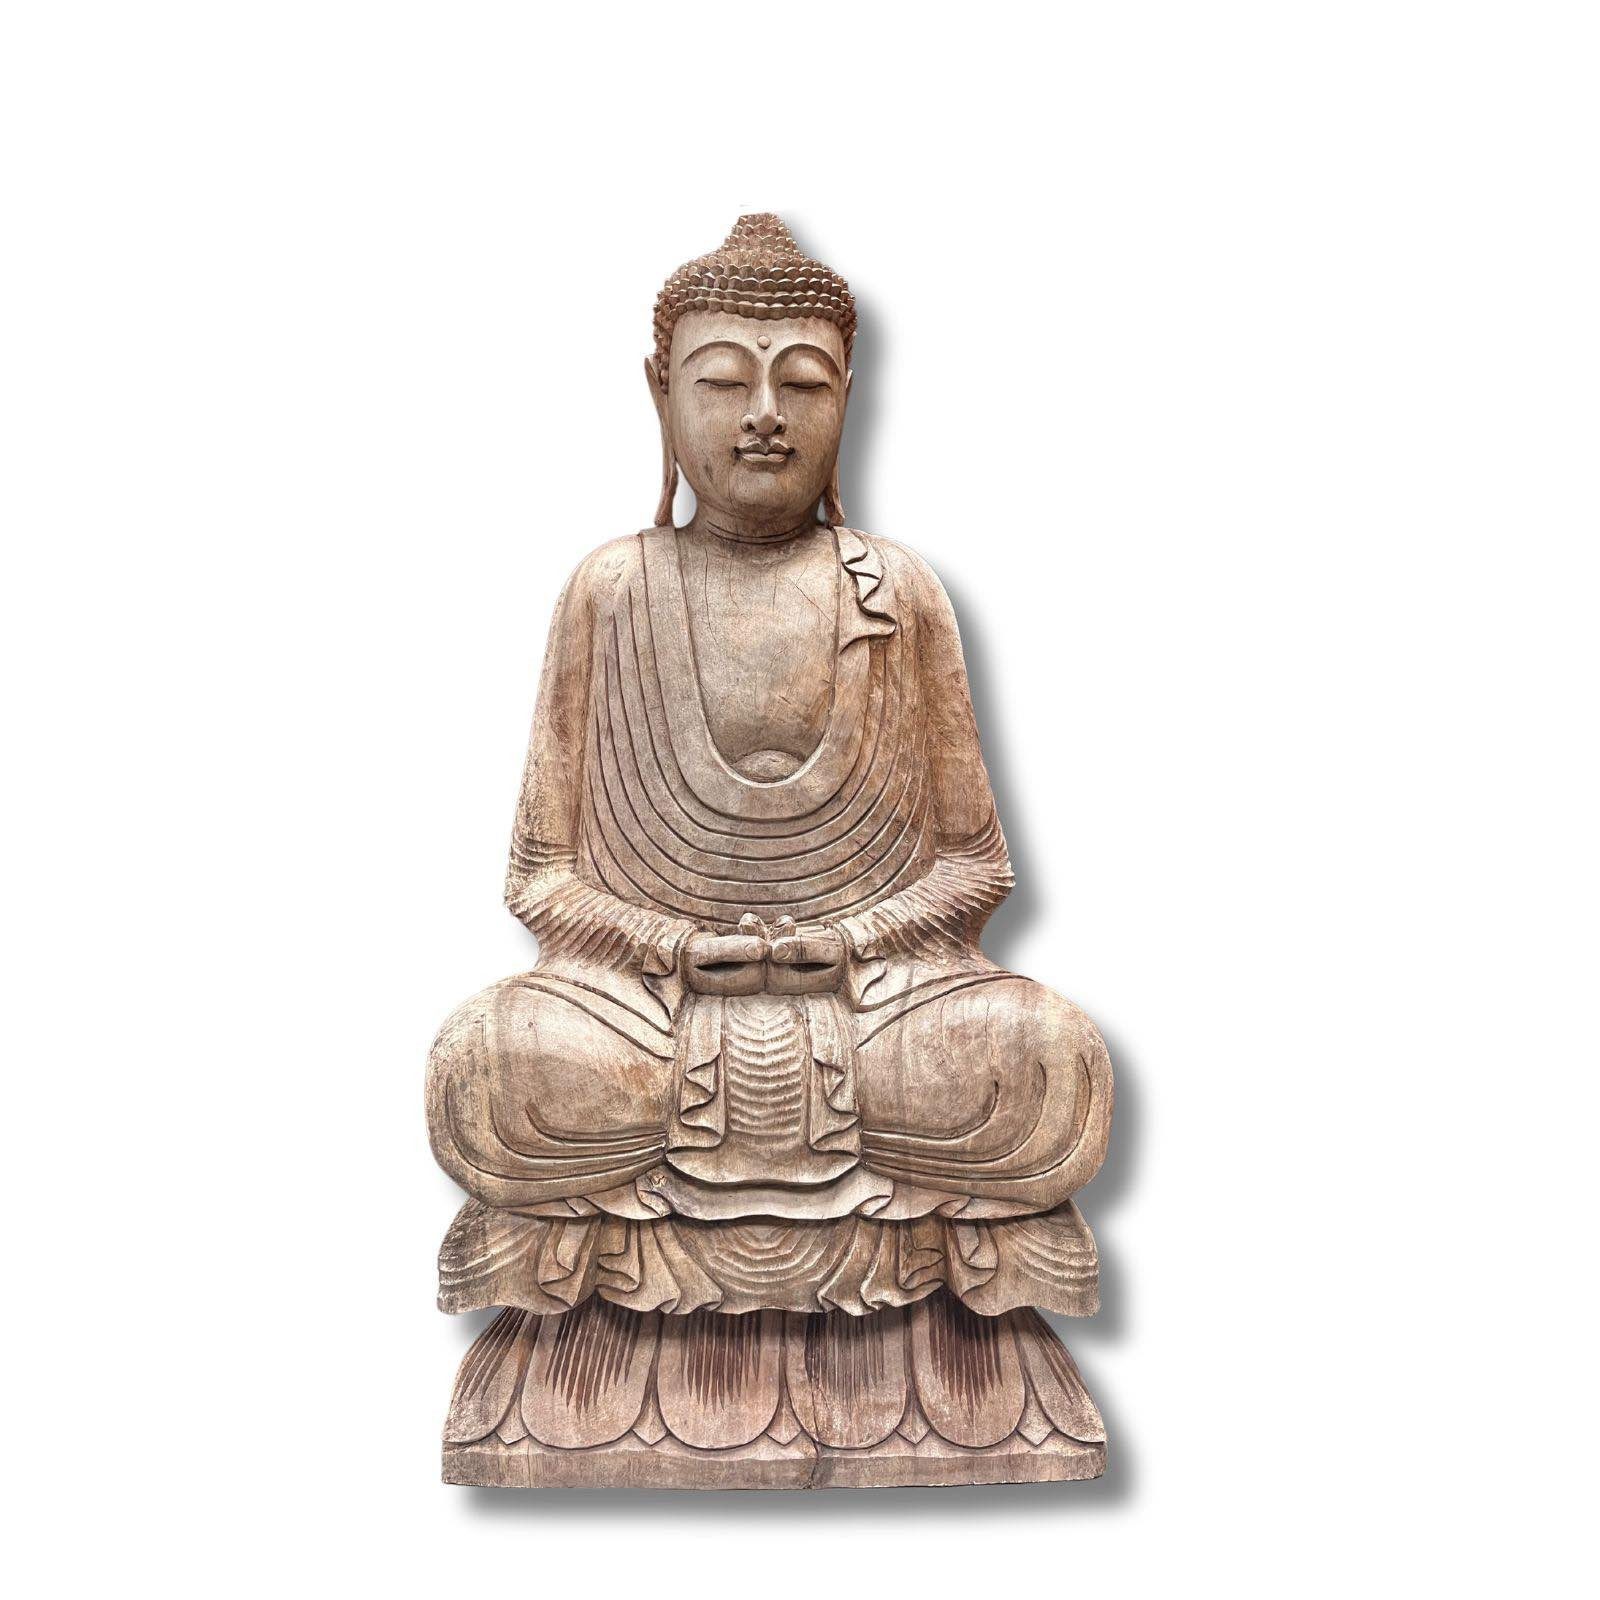 Asien LifeStyle Buddhafigur Meditation Buddha Figur aus Holz geschnitzt 105cm